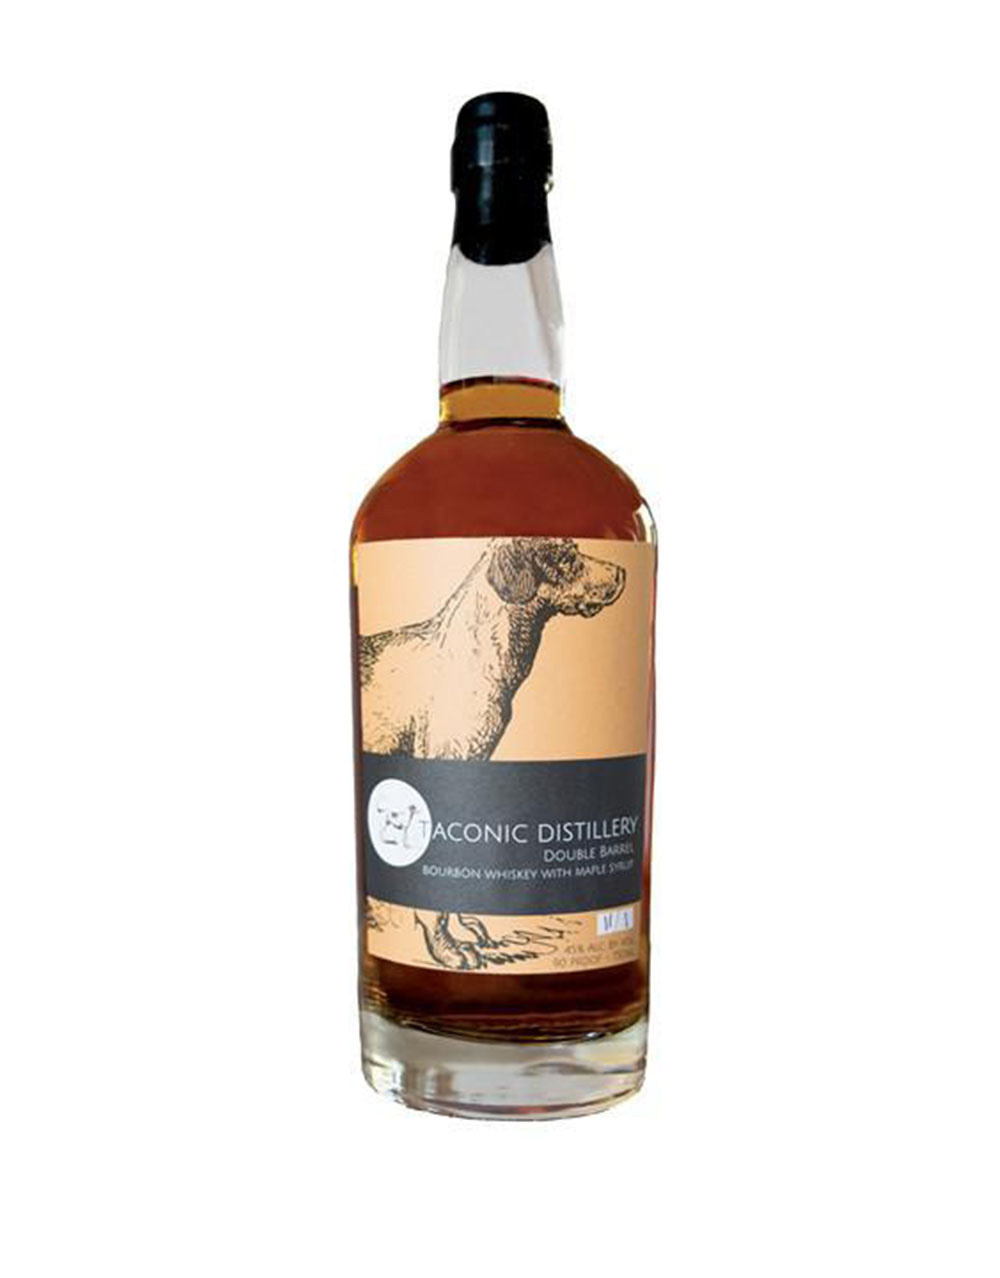 Taconic Distillery Double Barrel Maple Bourbon Whiskey